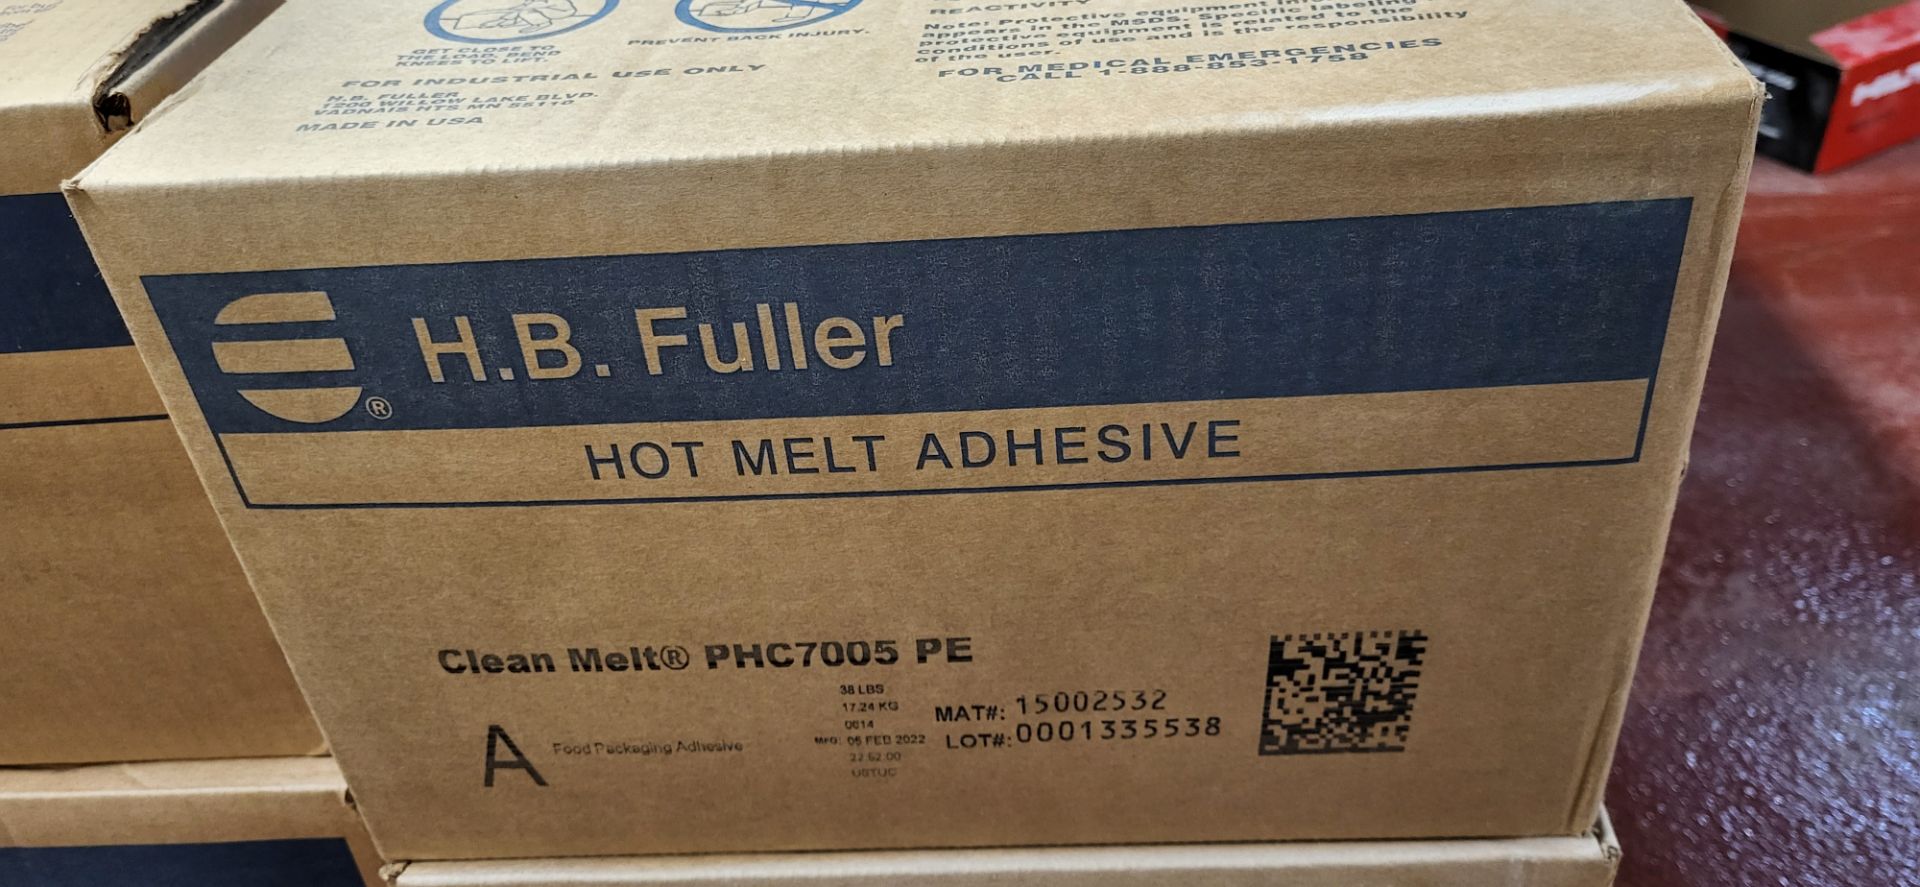 Lot of 18 Hot Melt Glue Chips Boxes, Unopened 38LBS each, HB Fuller - Image 2 of 4